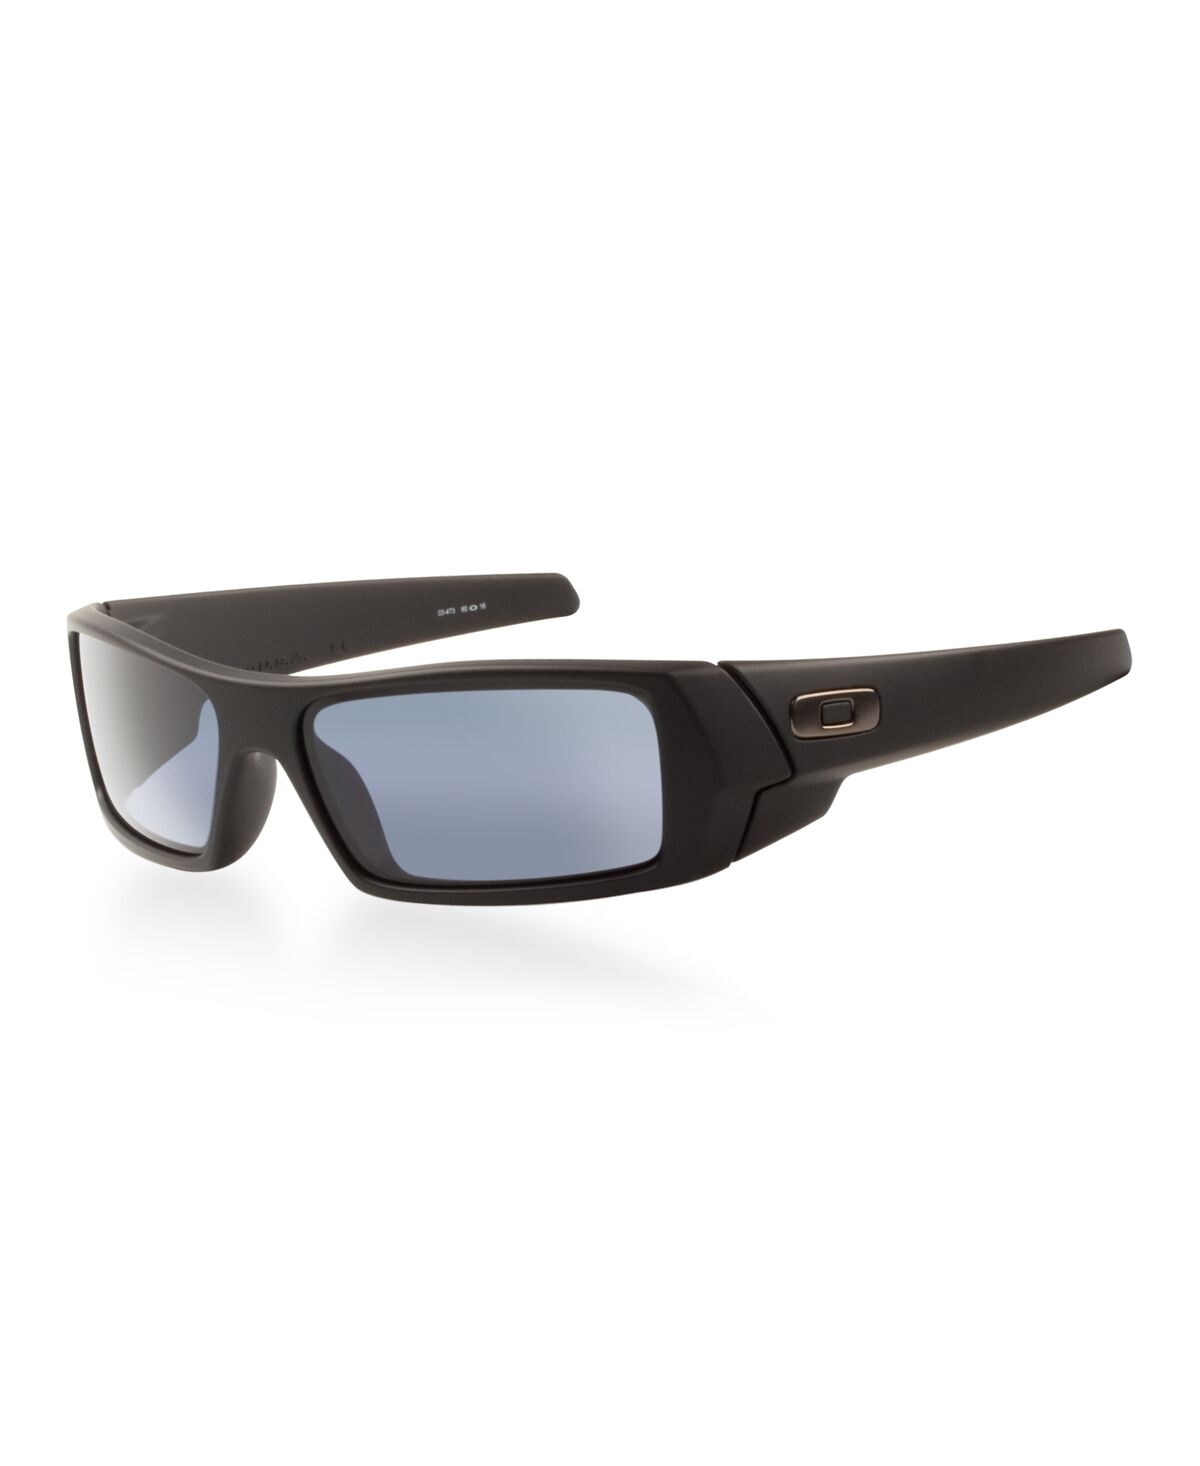 Oakley Gascan Sunglasses, OO9014 - Black/Grey